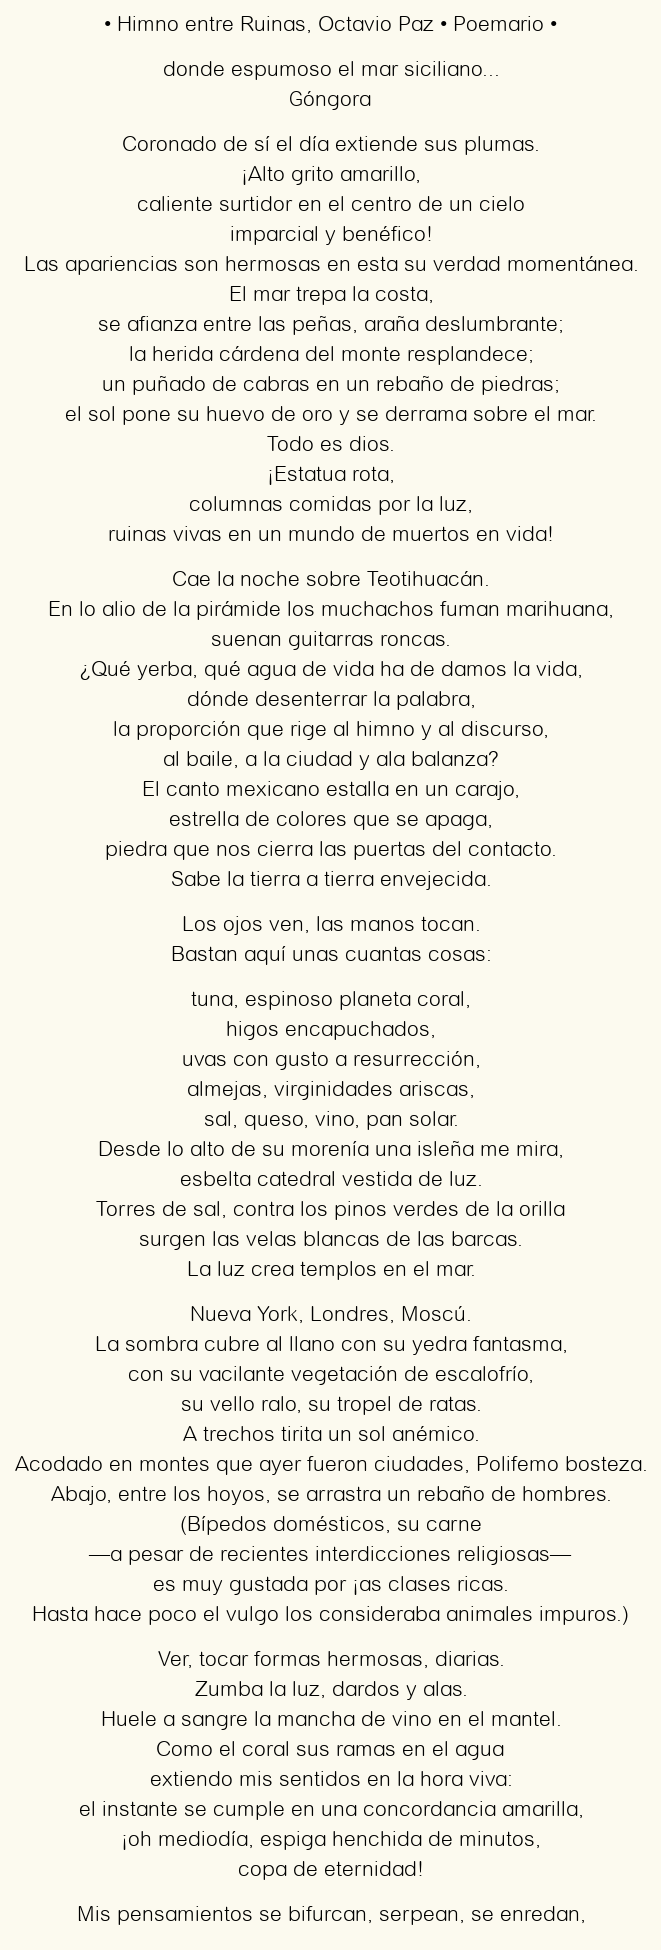 Himno entre Ruinas, por Octavio Paz